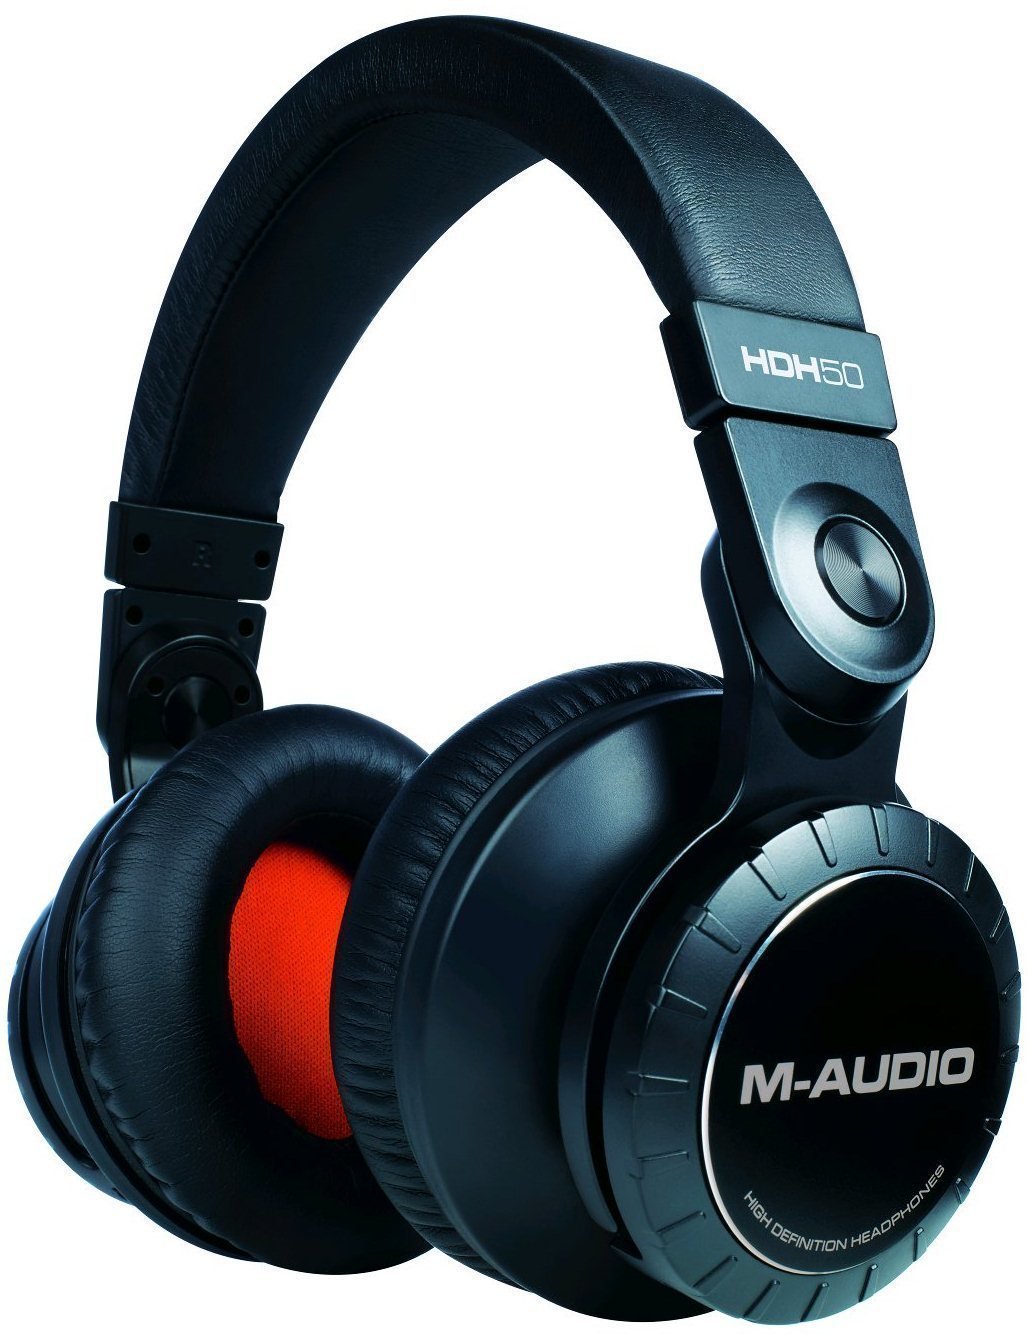 Auscultadores de estúdio M-Audio HDH50 High Definition Headphones